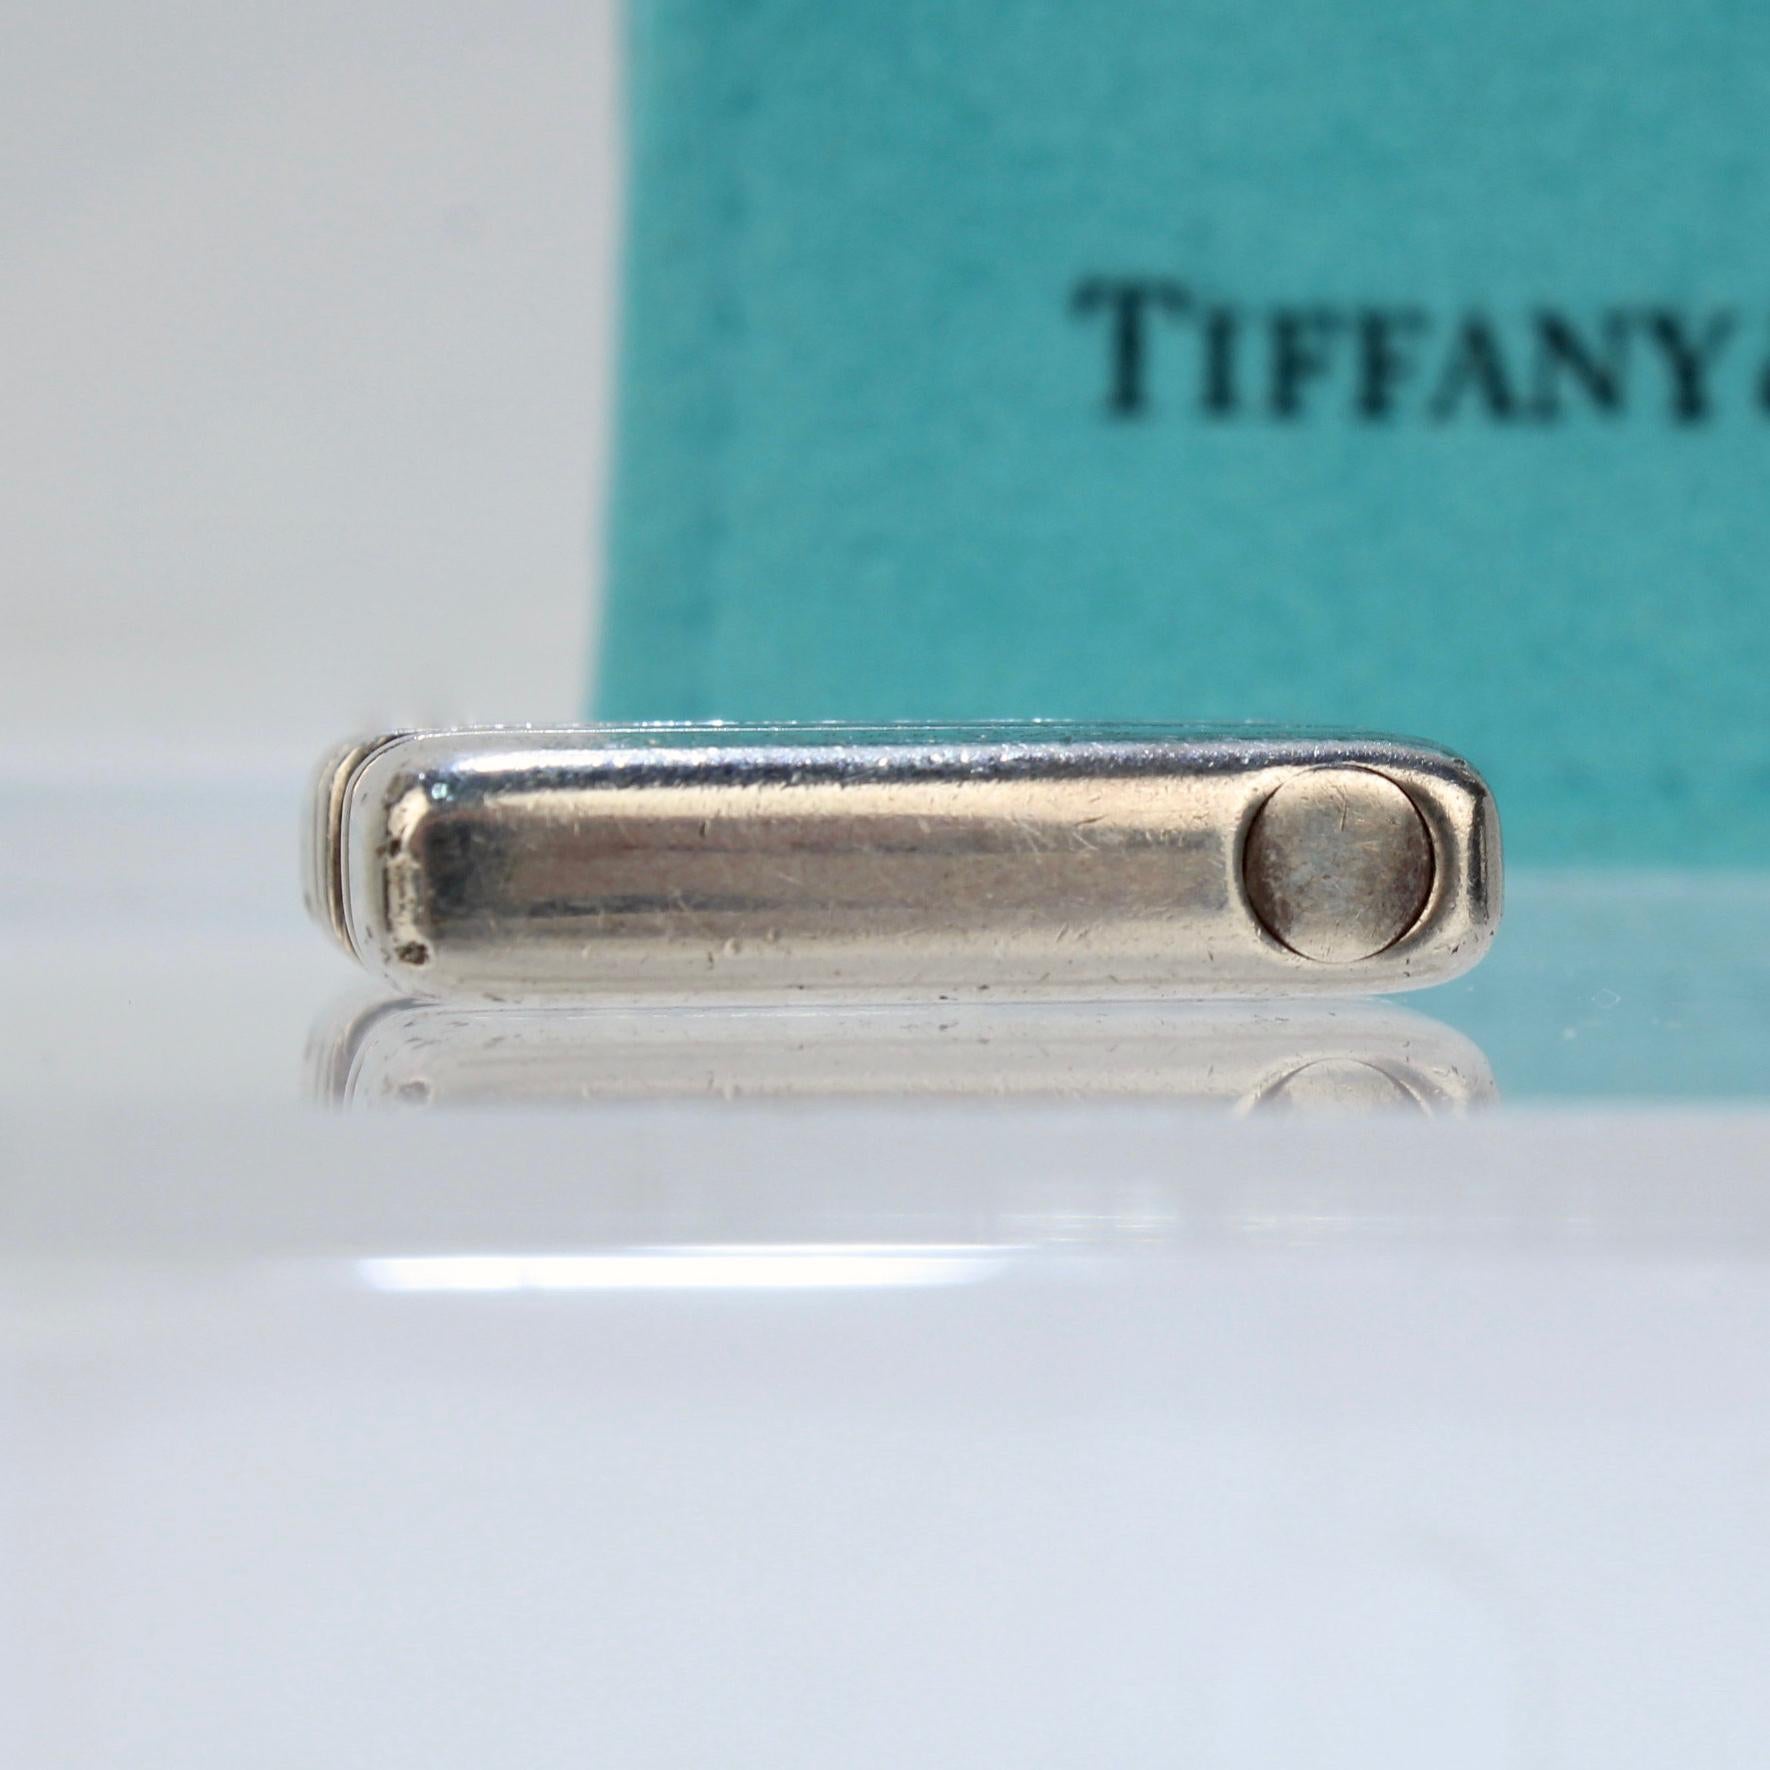 Vintage Tiffany & Co Sterling Silver Atlas Lock-Shaped Key Holder For Sale 4